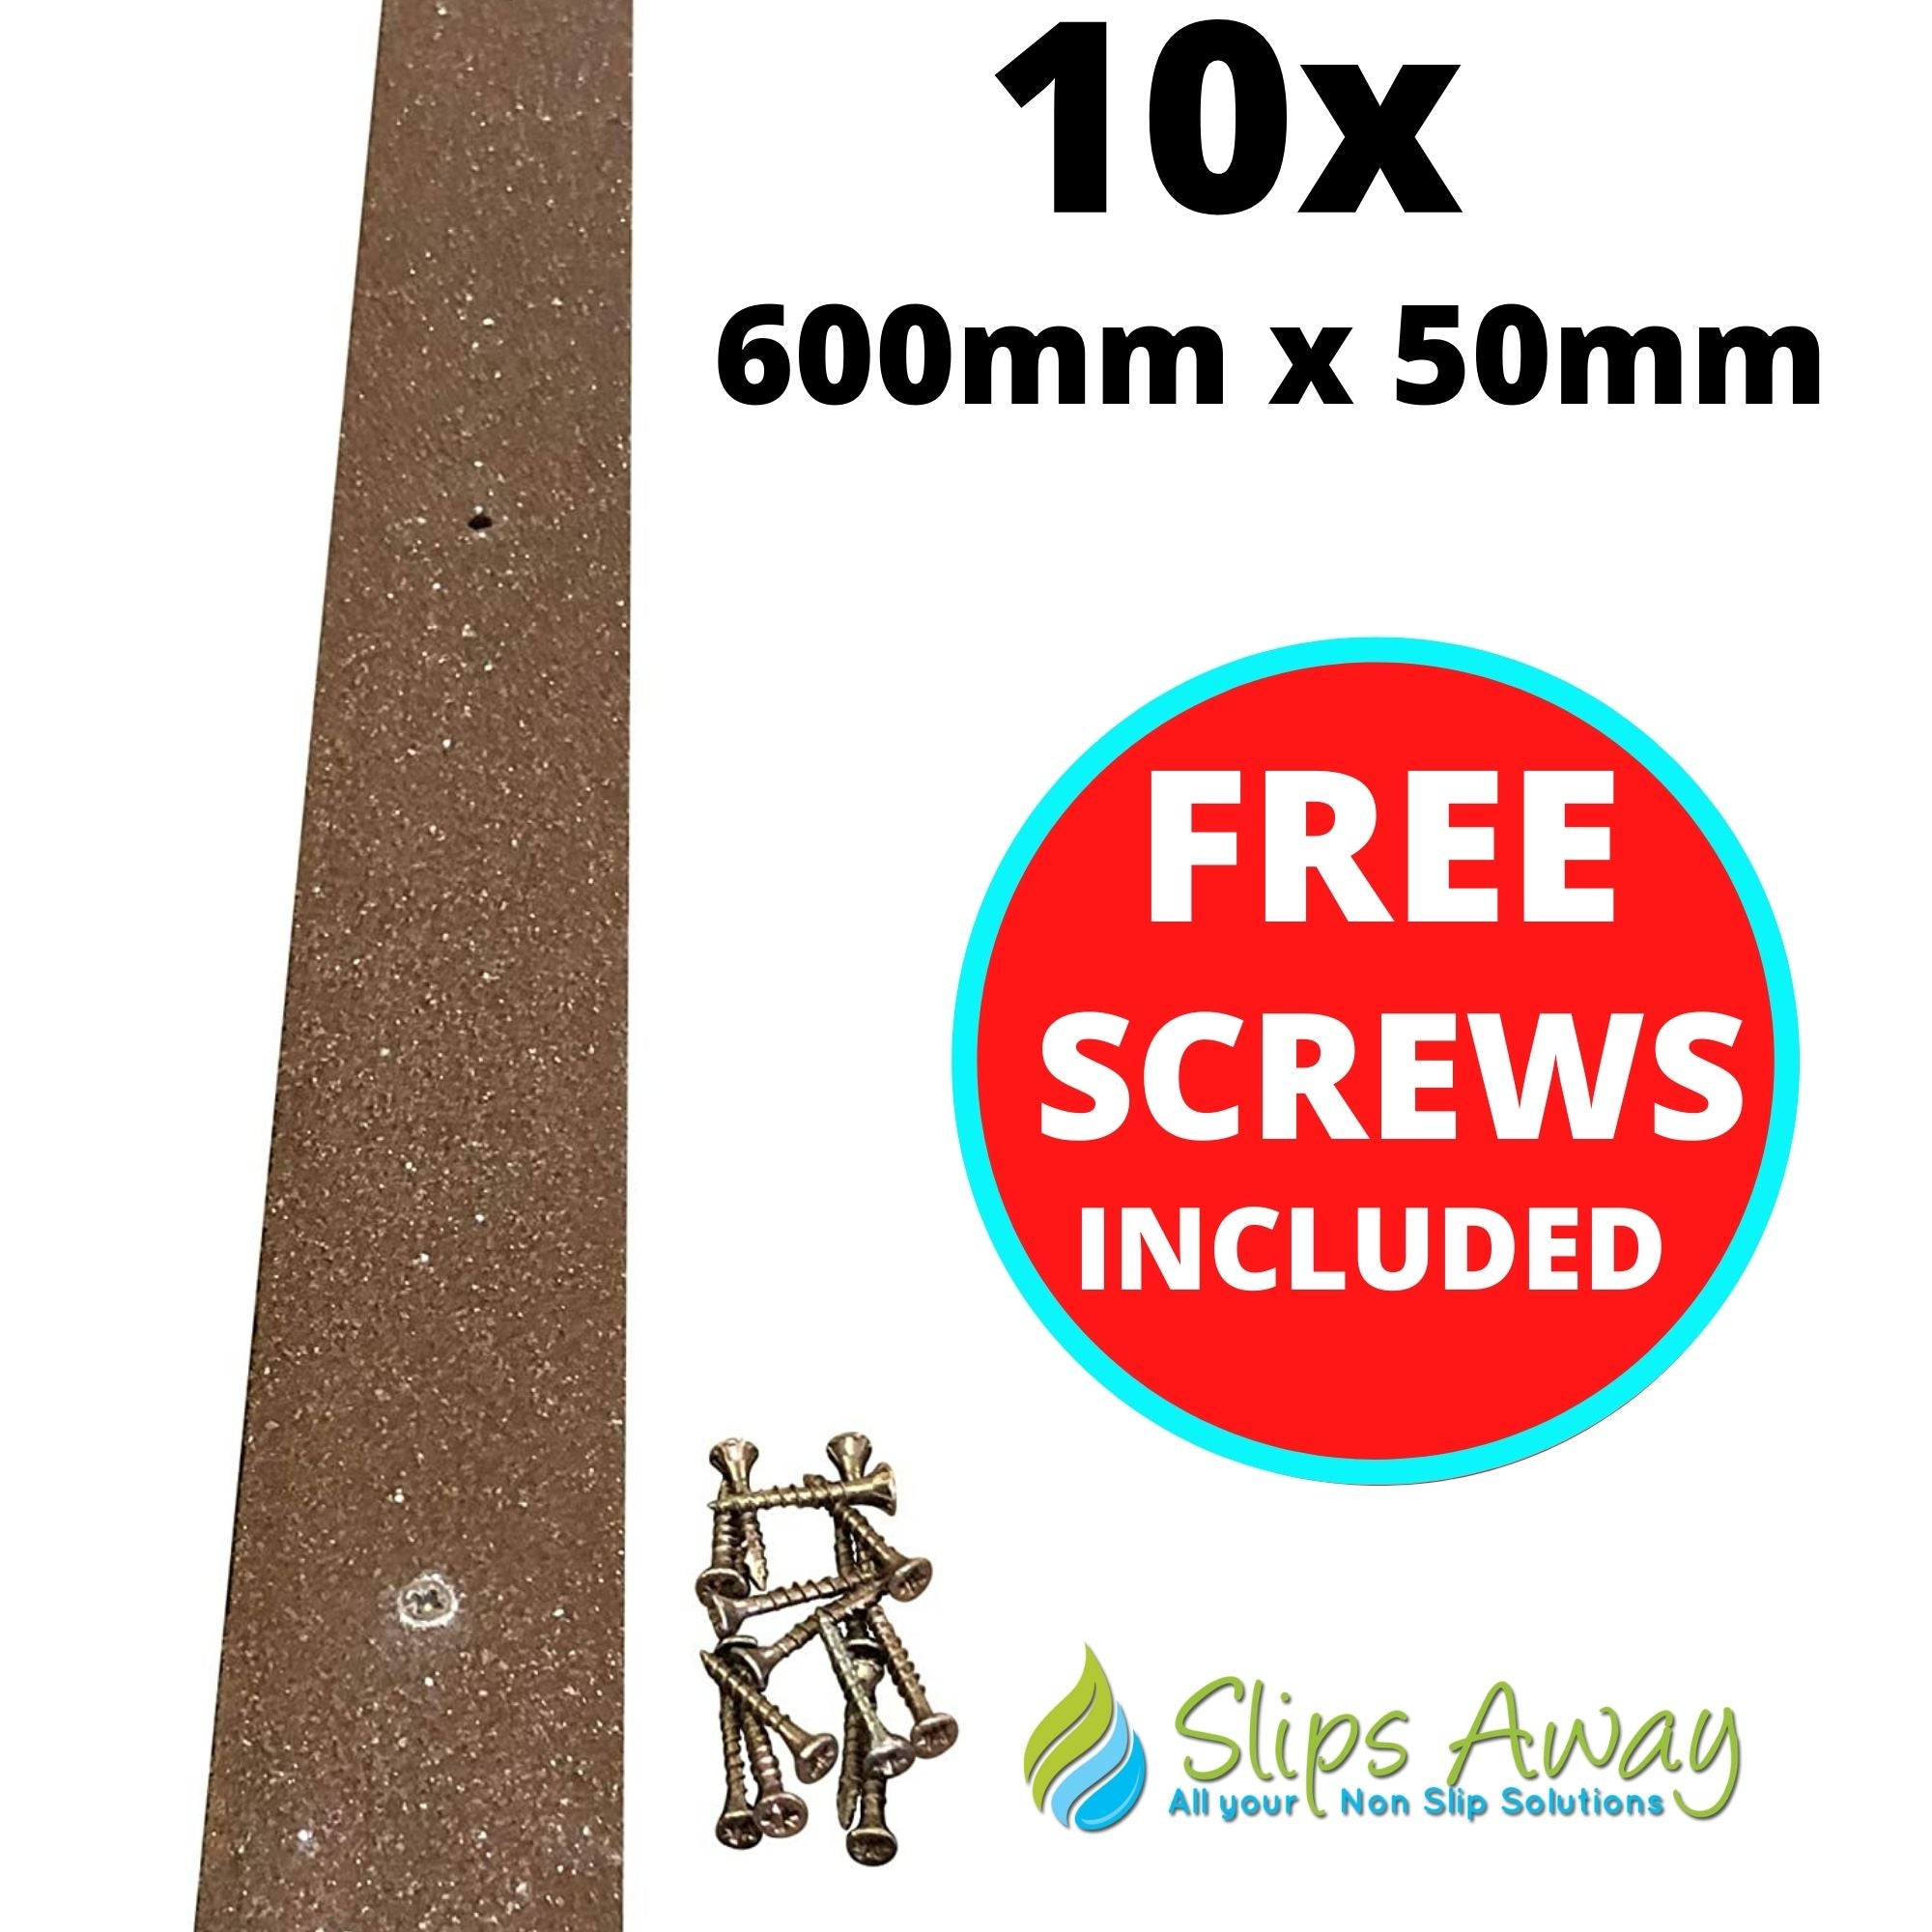 Brown Non Slip Decking Strips - Slips Away decking strip brown 600mm x 50mm 10x pack -# - 5061000044215 decking strip brown 600mm x 50mm 10x pack - 600mm x 50mm